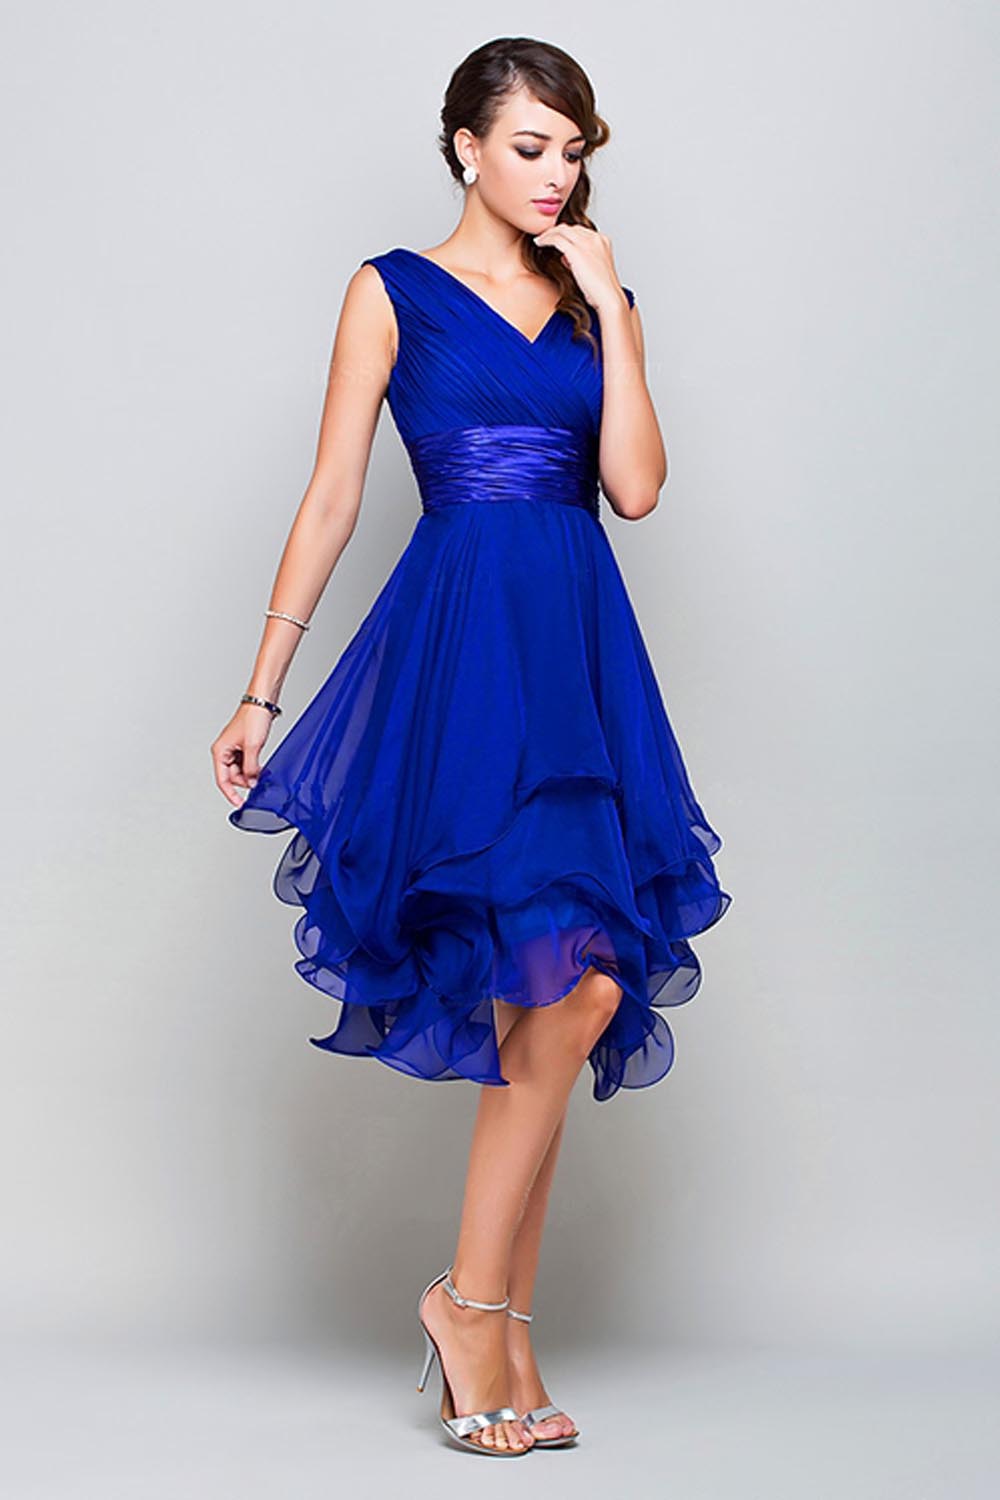 Blue Chiffon Cocktail Dresses